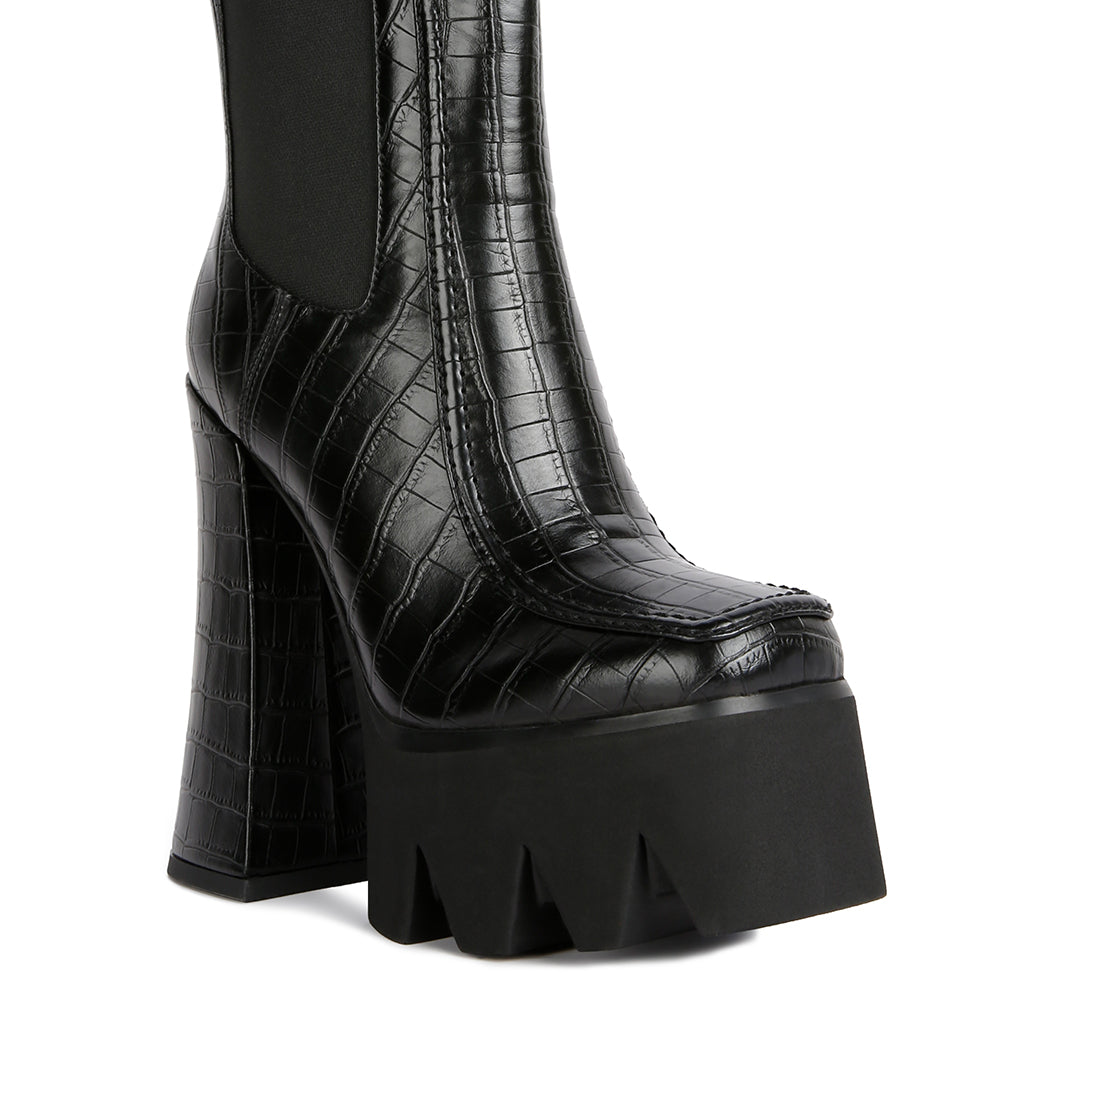 Black High Platform Heel Chelsea Boots